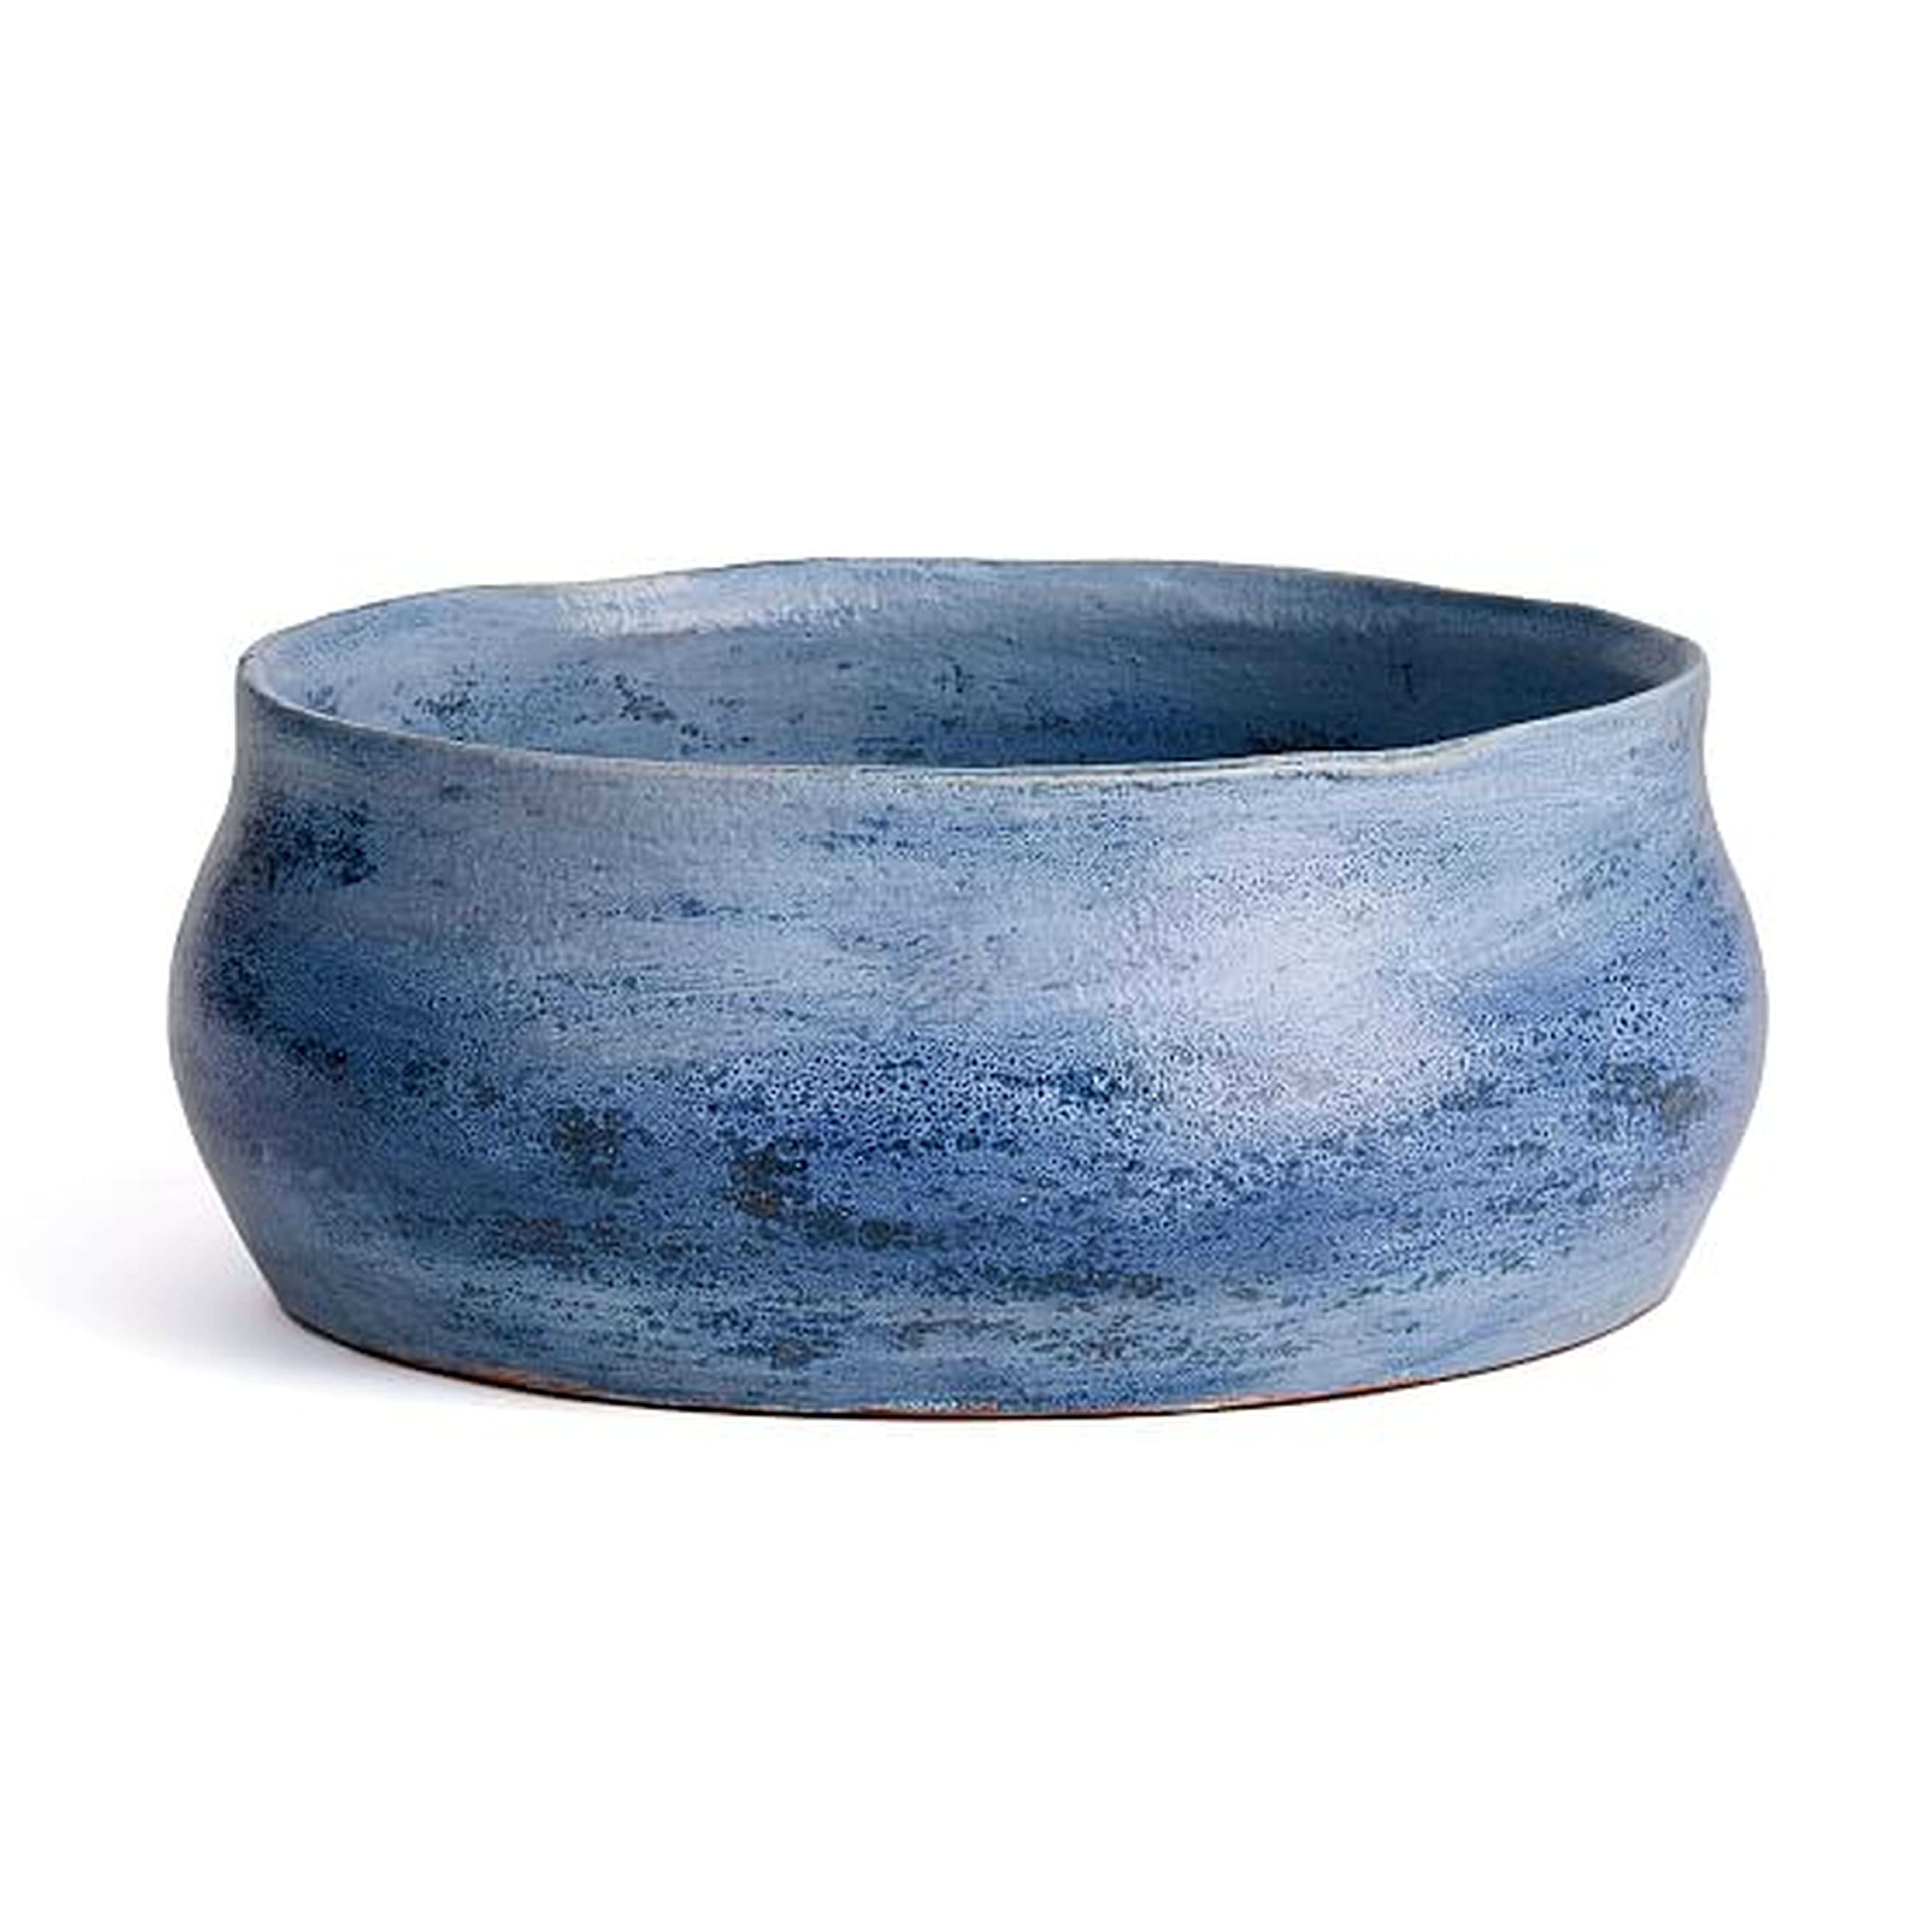 Caspian Ceramic Decorative Bowl, Blue Ombre - West Elm